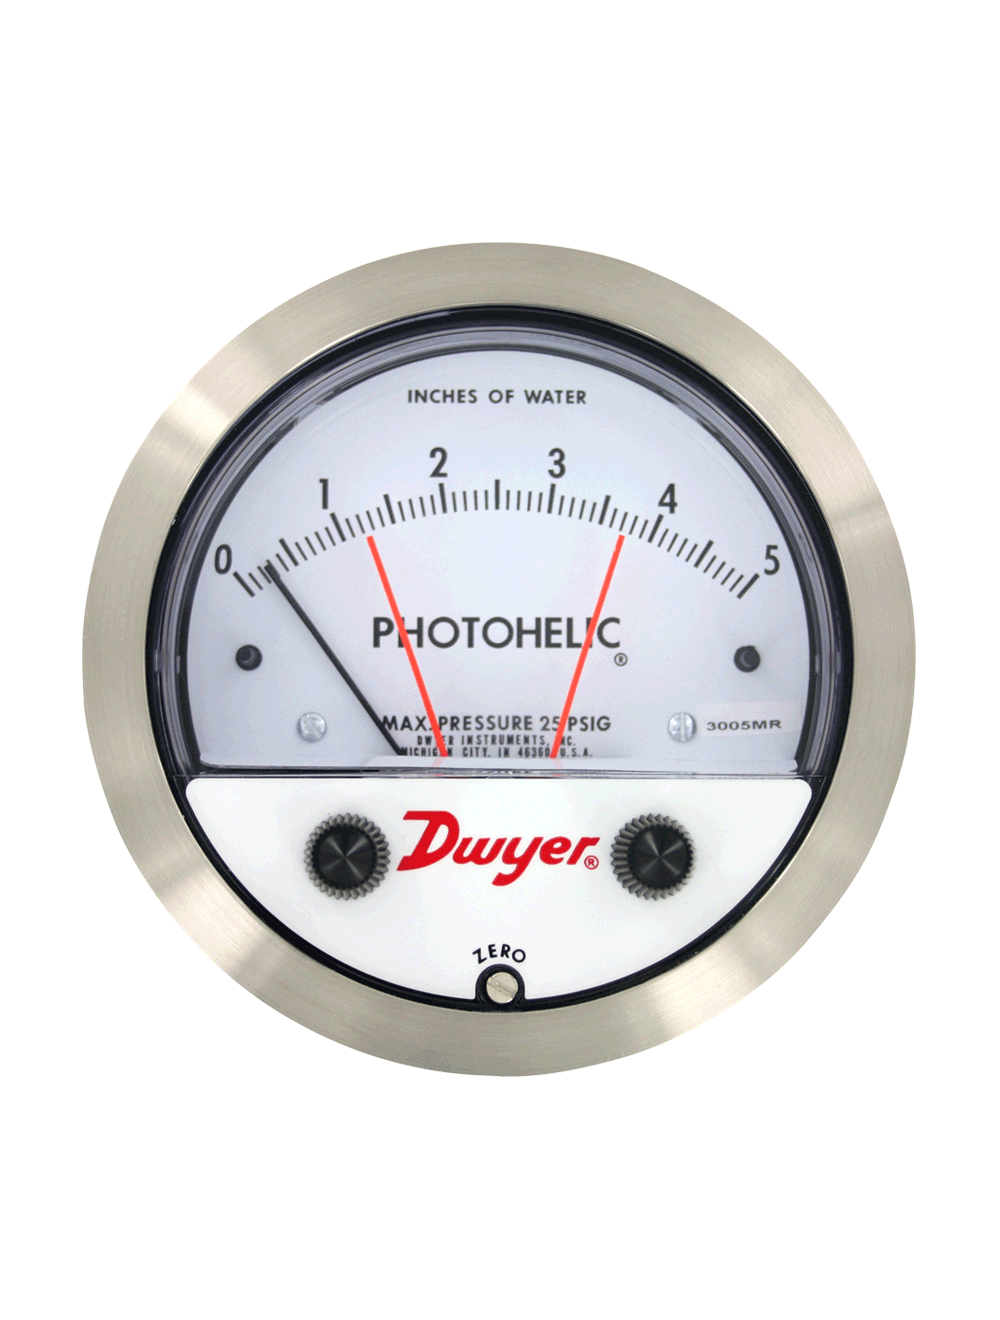 Digital pressure gauge - 3203 - Instrumate